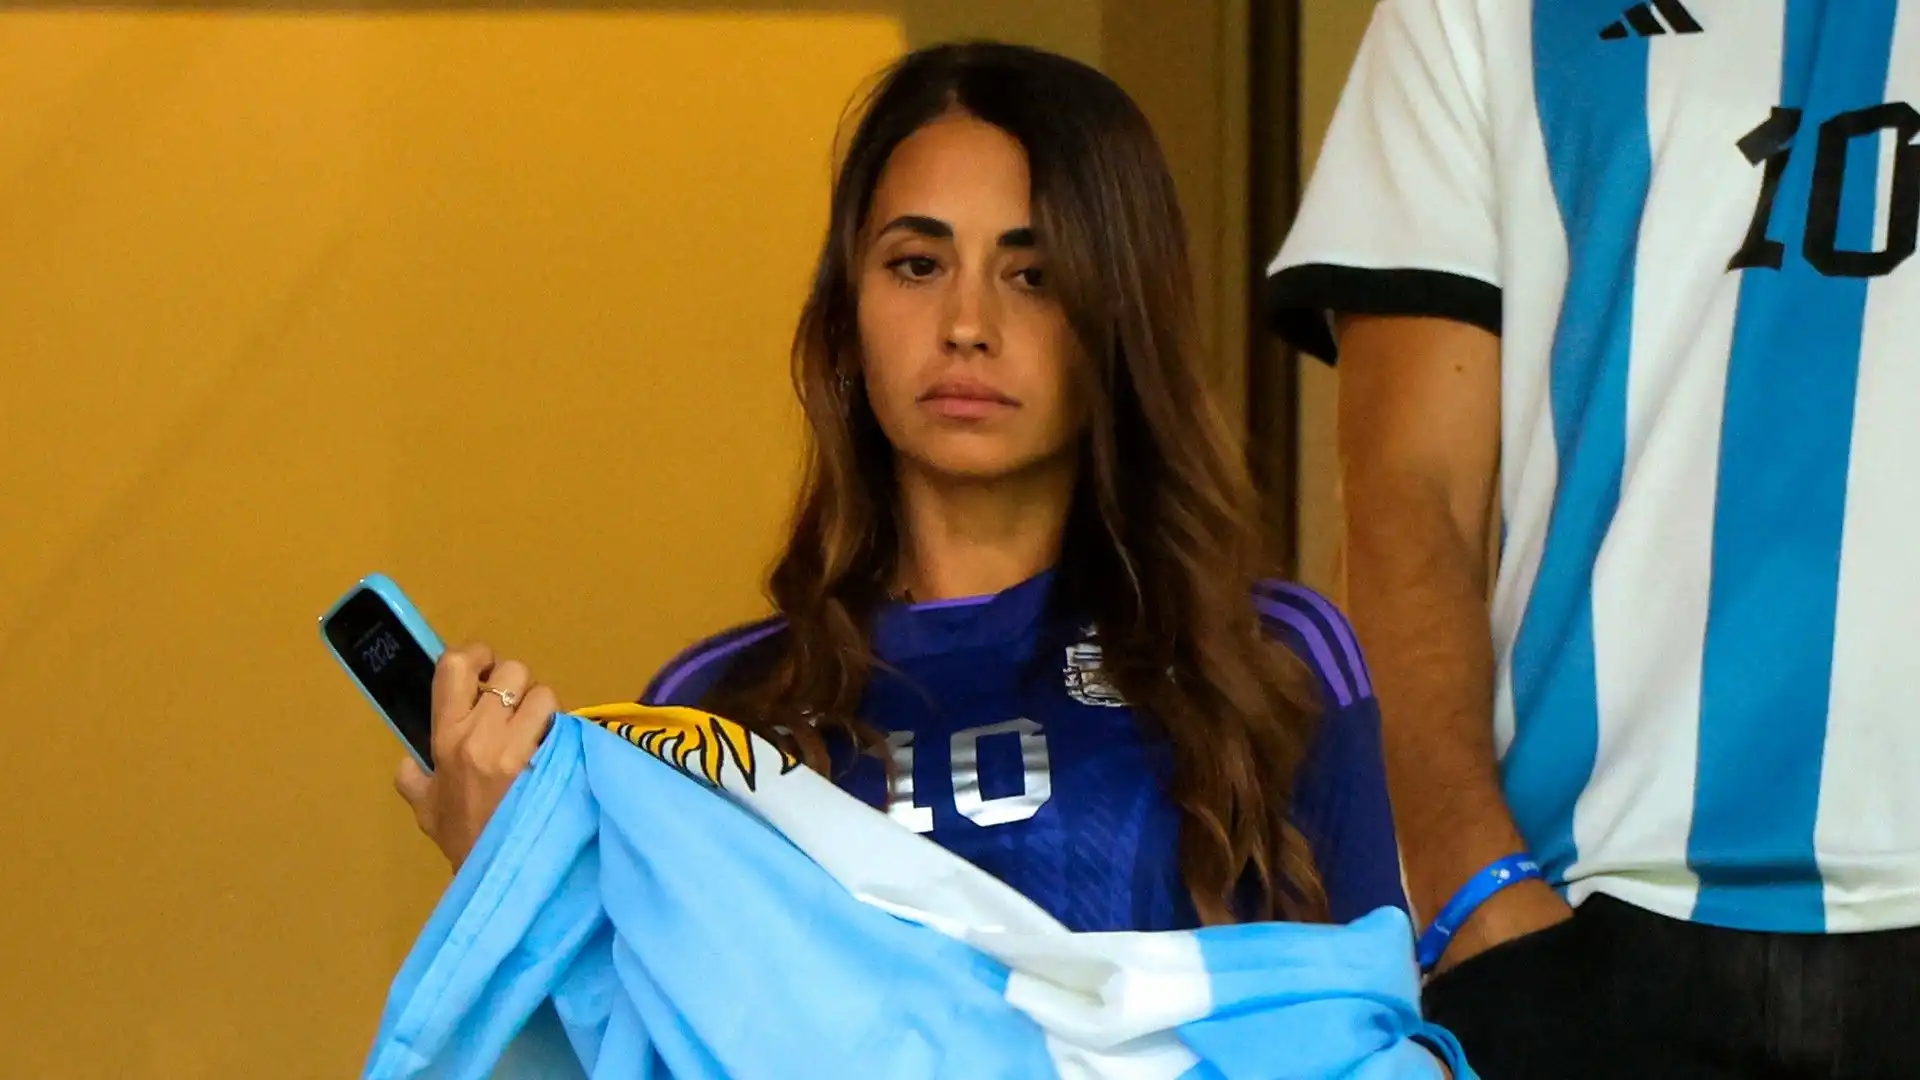 Ecco Antonella con la bandiera dell'Argentina in mano